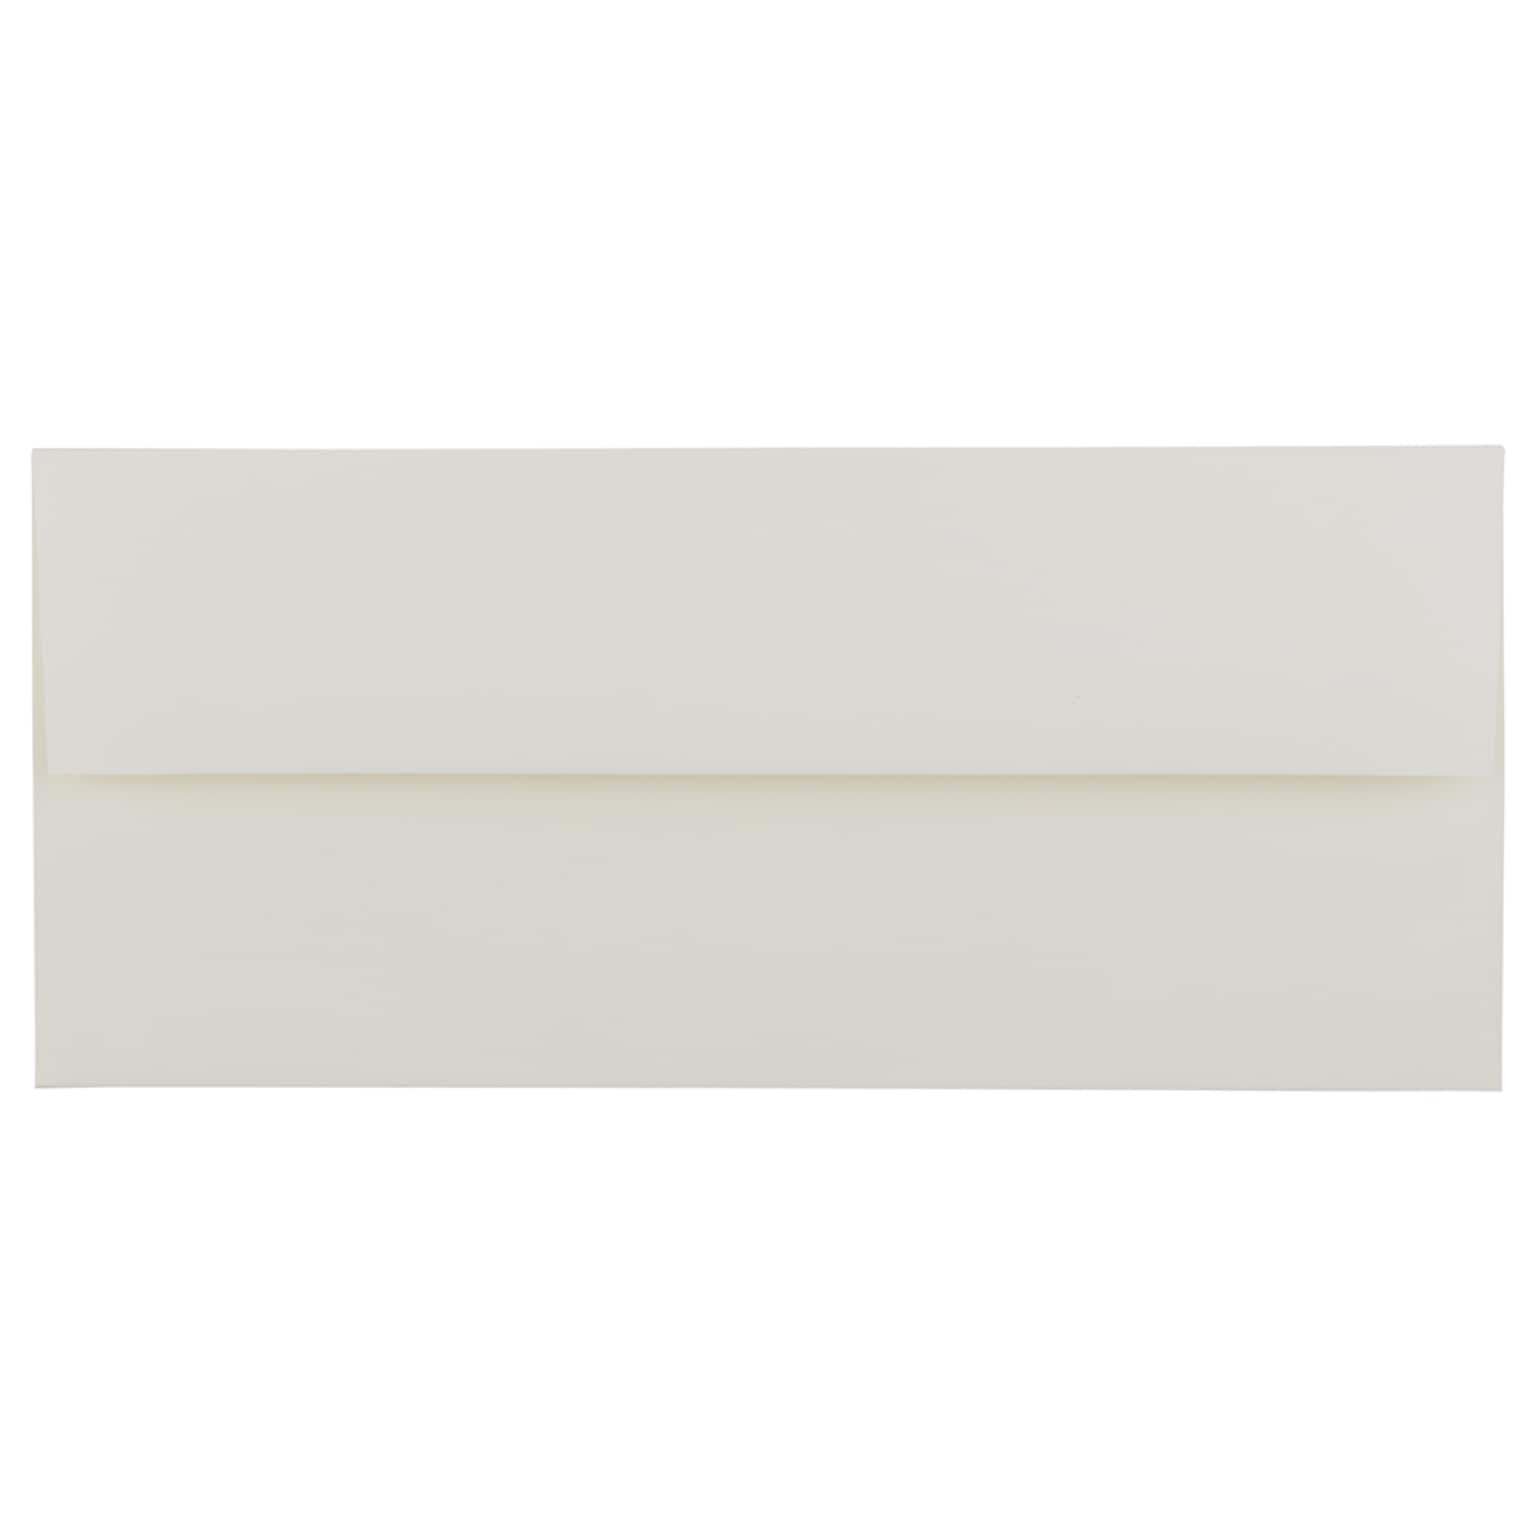 JAM Paper Strathmore Open End #10 Business Envelope, 4 1/8 x 9 1/2, Natural White, 50/Pack (70746I)